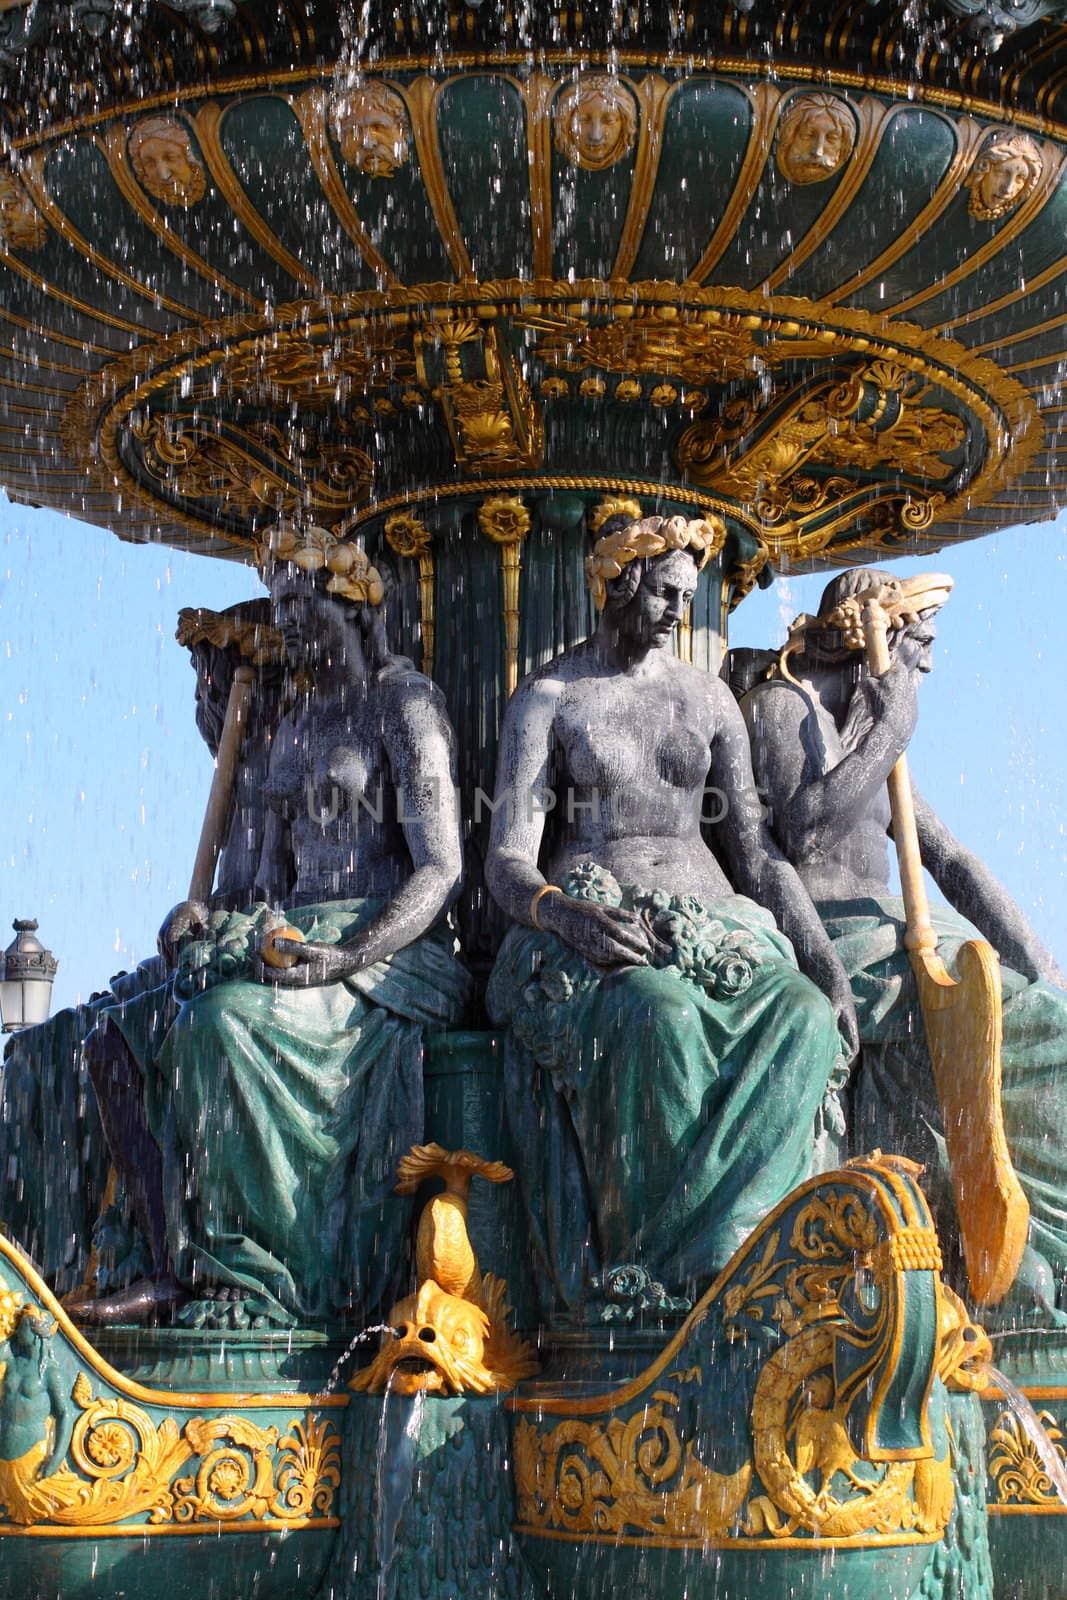 Fountain, Place de la Concorde by mariusz_prusaczyk